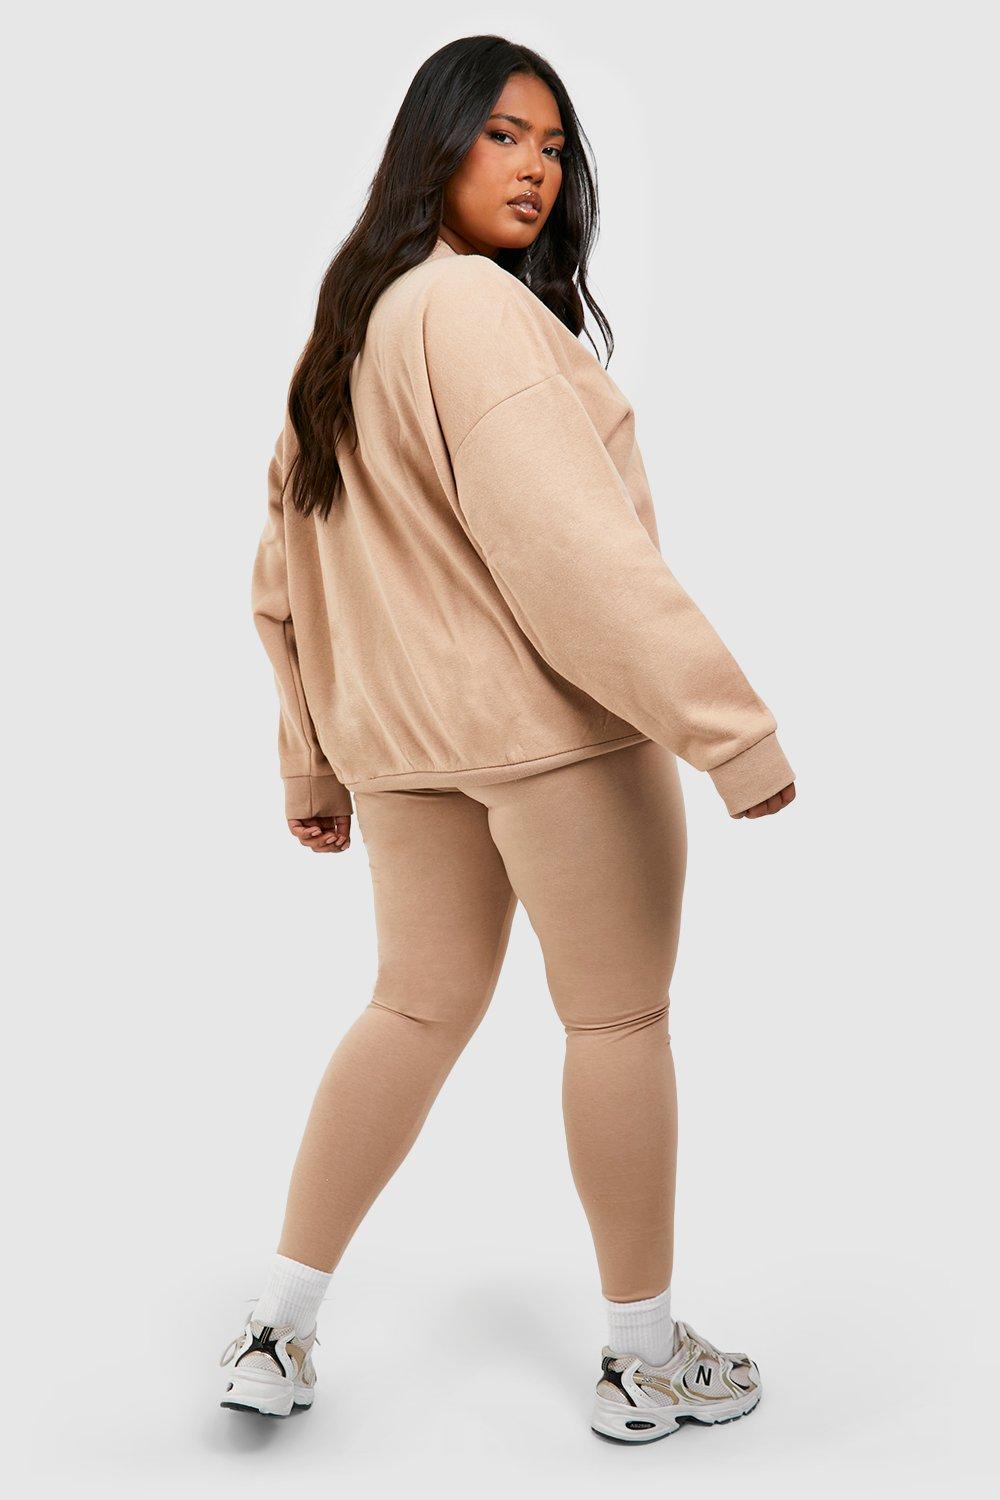 https://media.boohoo.com/i/boohoo/gzz62019_taupe_xl_1/female-taupe-plus-oversized-sweatshirt-and-legging-set